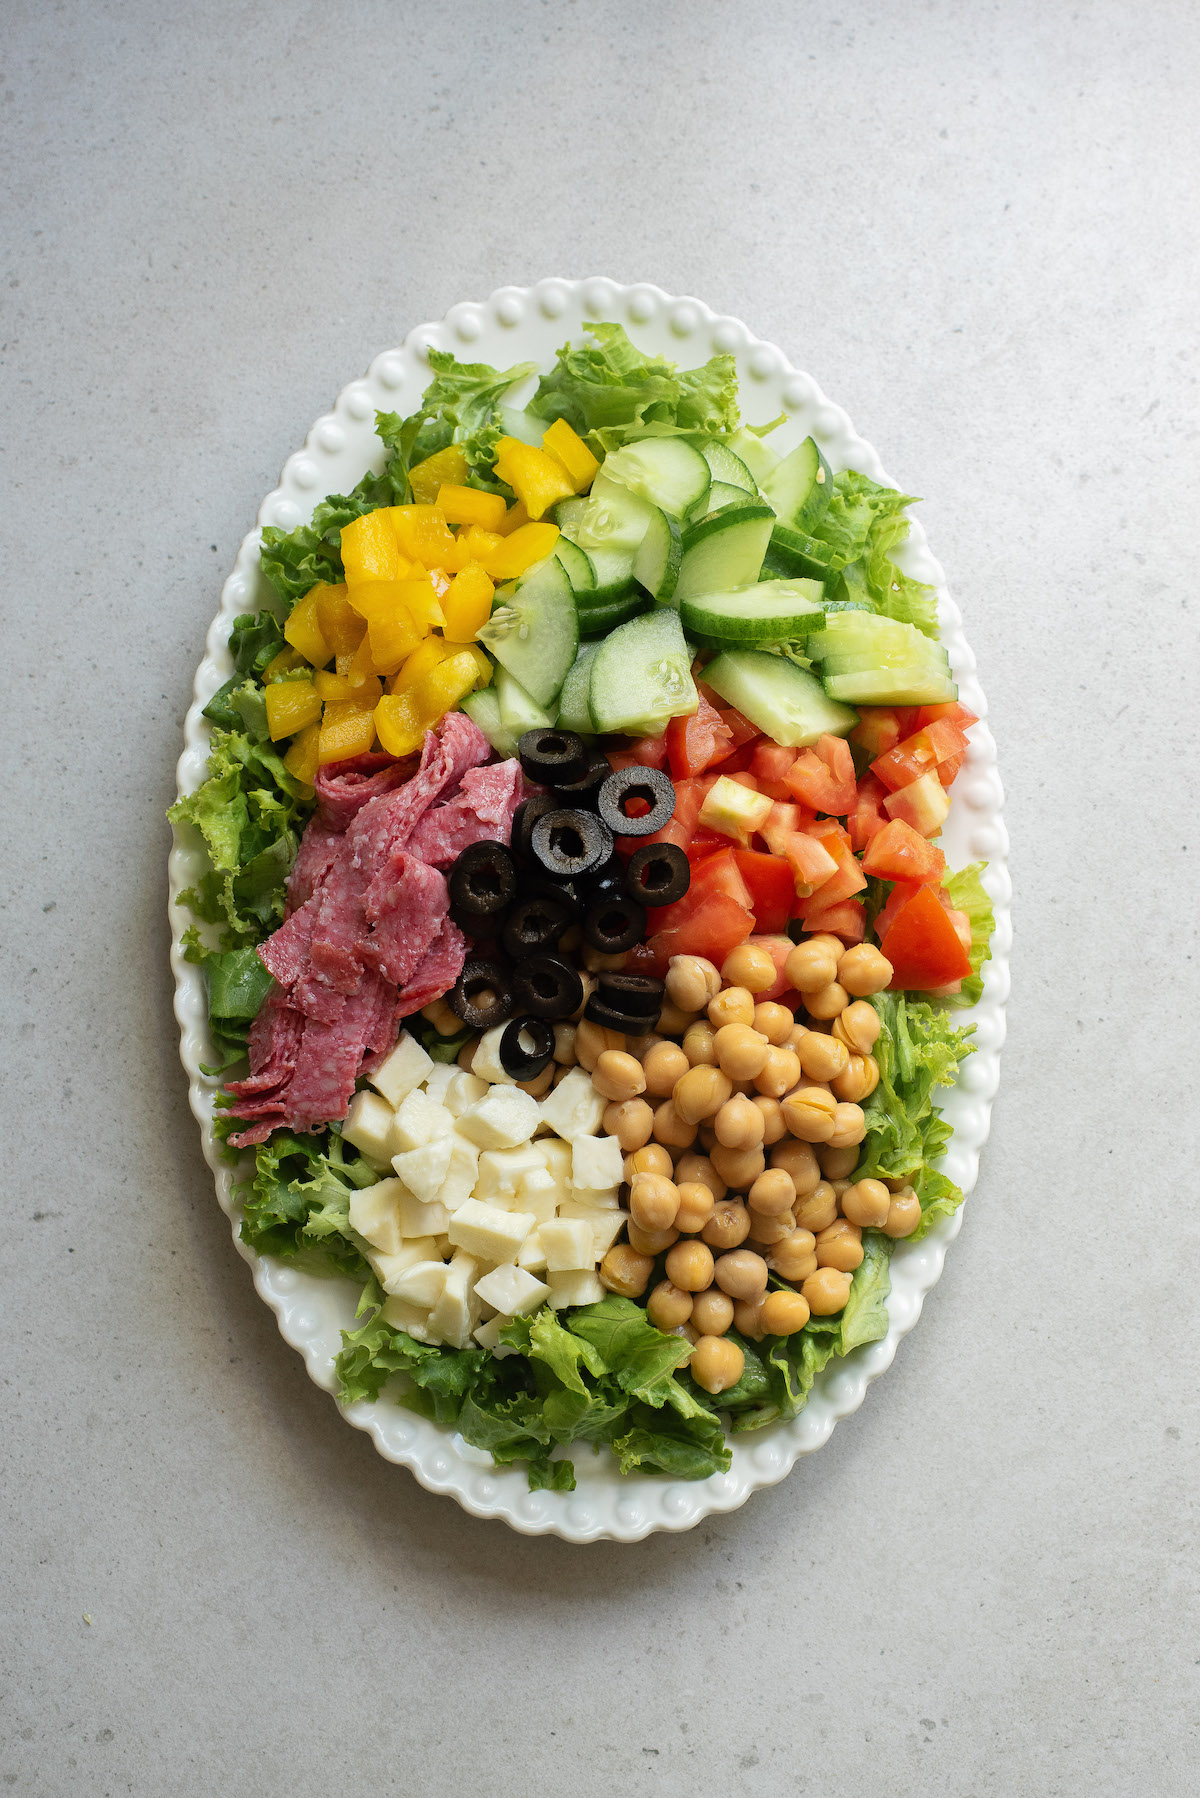 the salad ingredients on a large serving platter